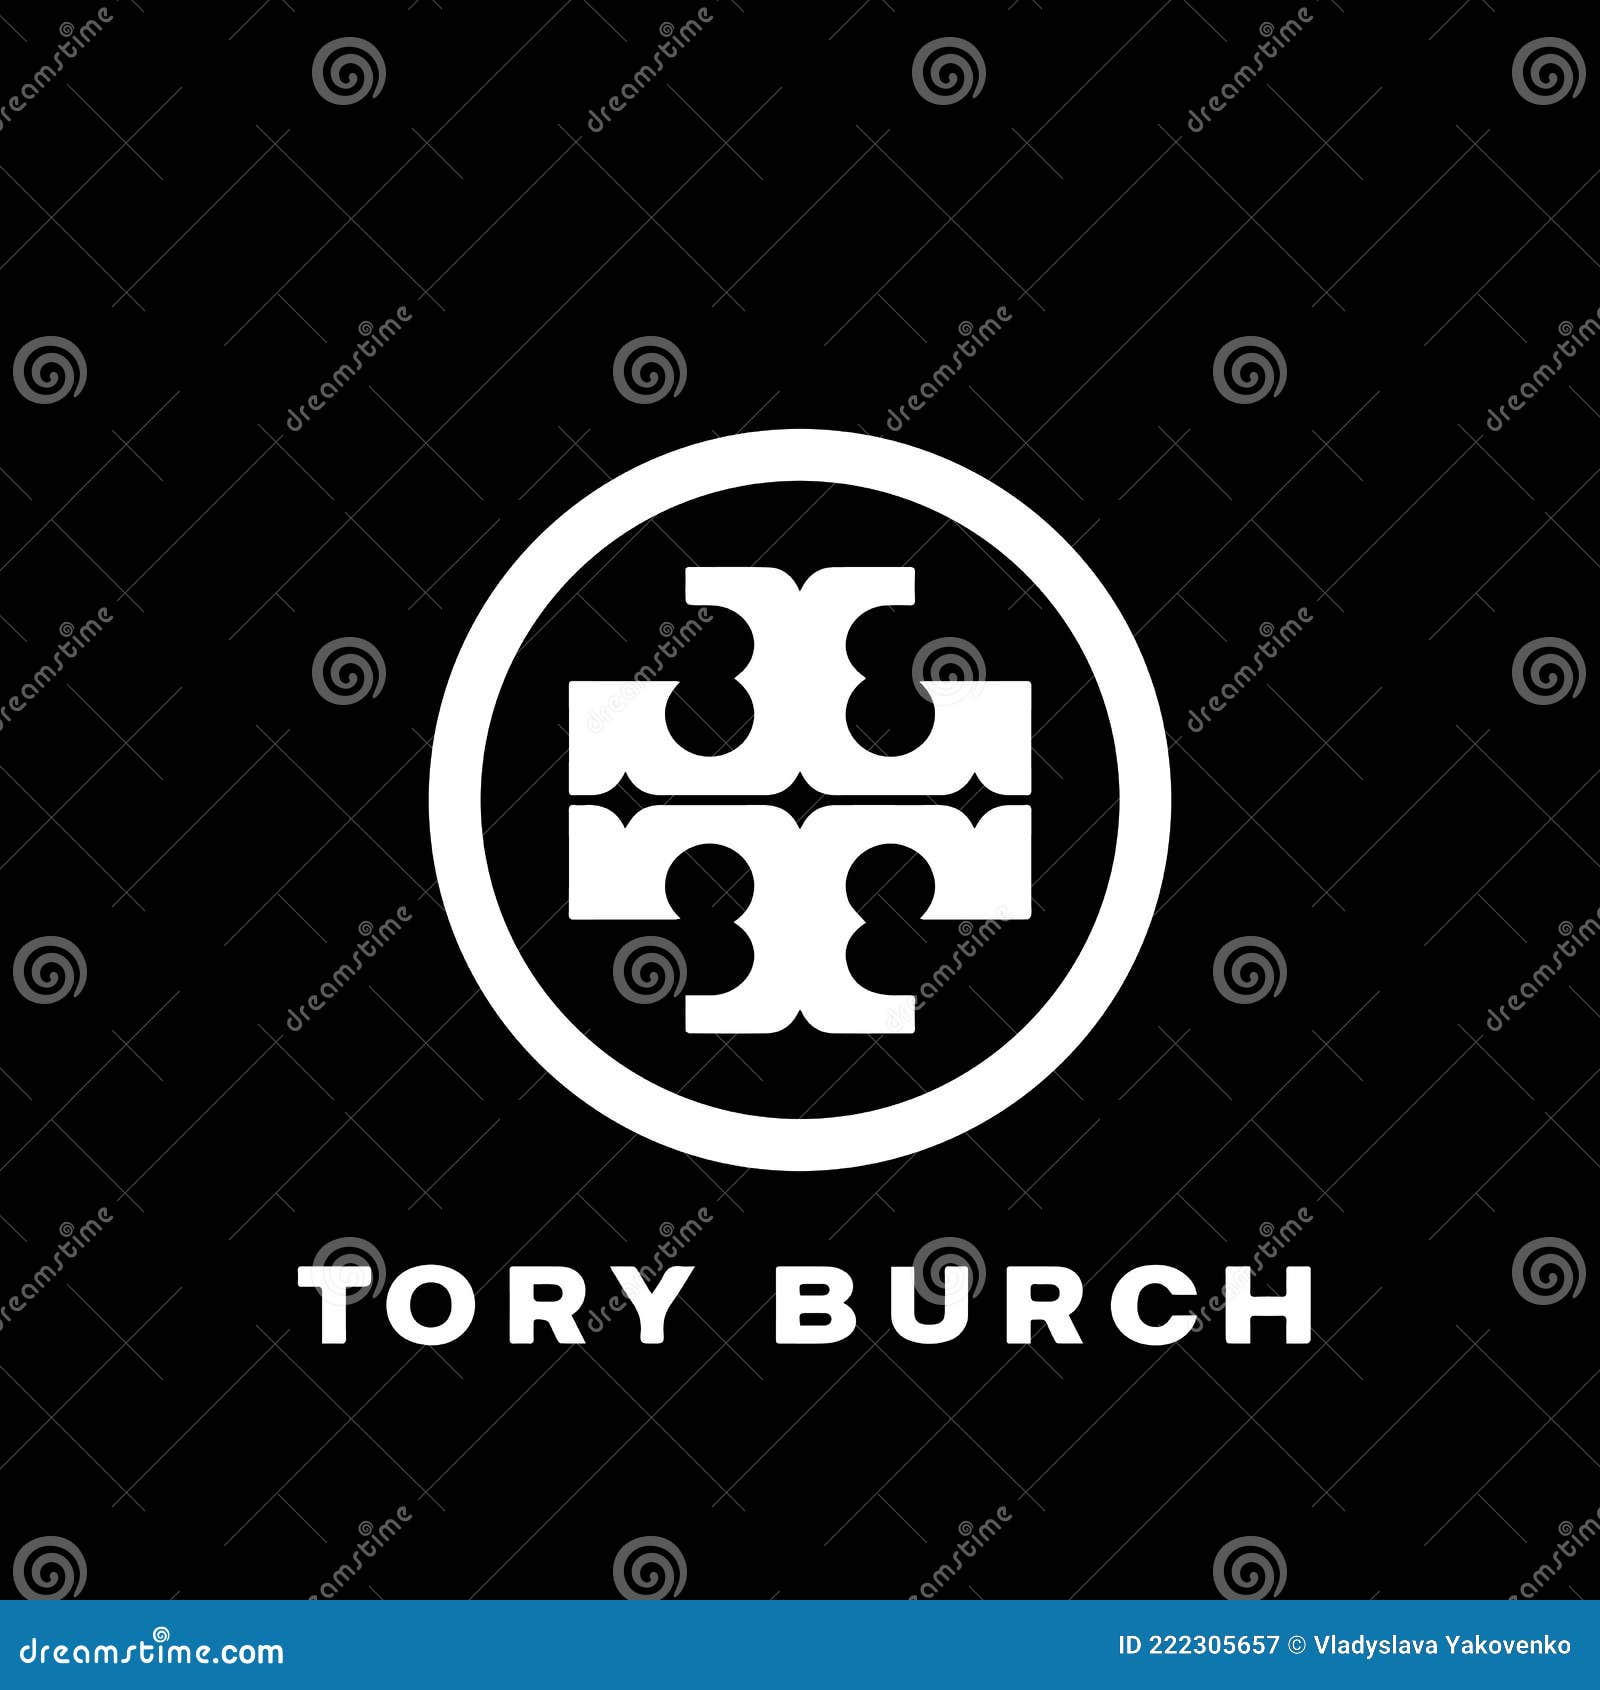 Tory Burch. Logo Popular Clothing Brand. TORY BURCH Famous Luxury